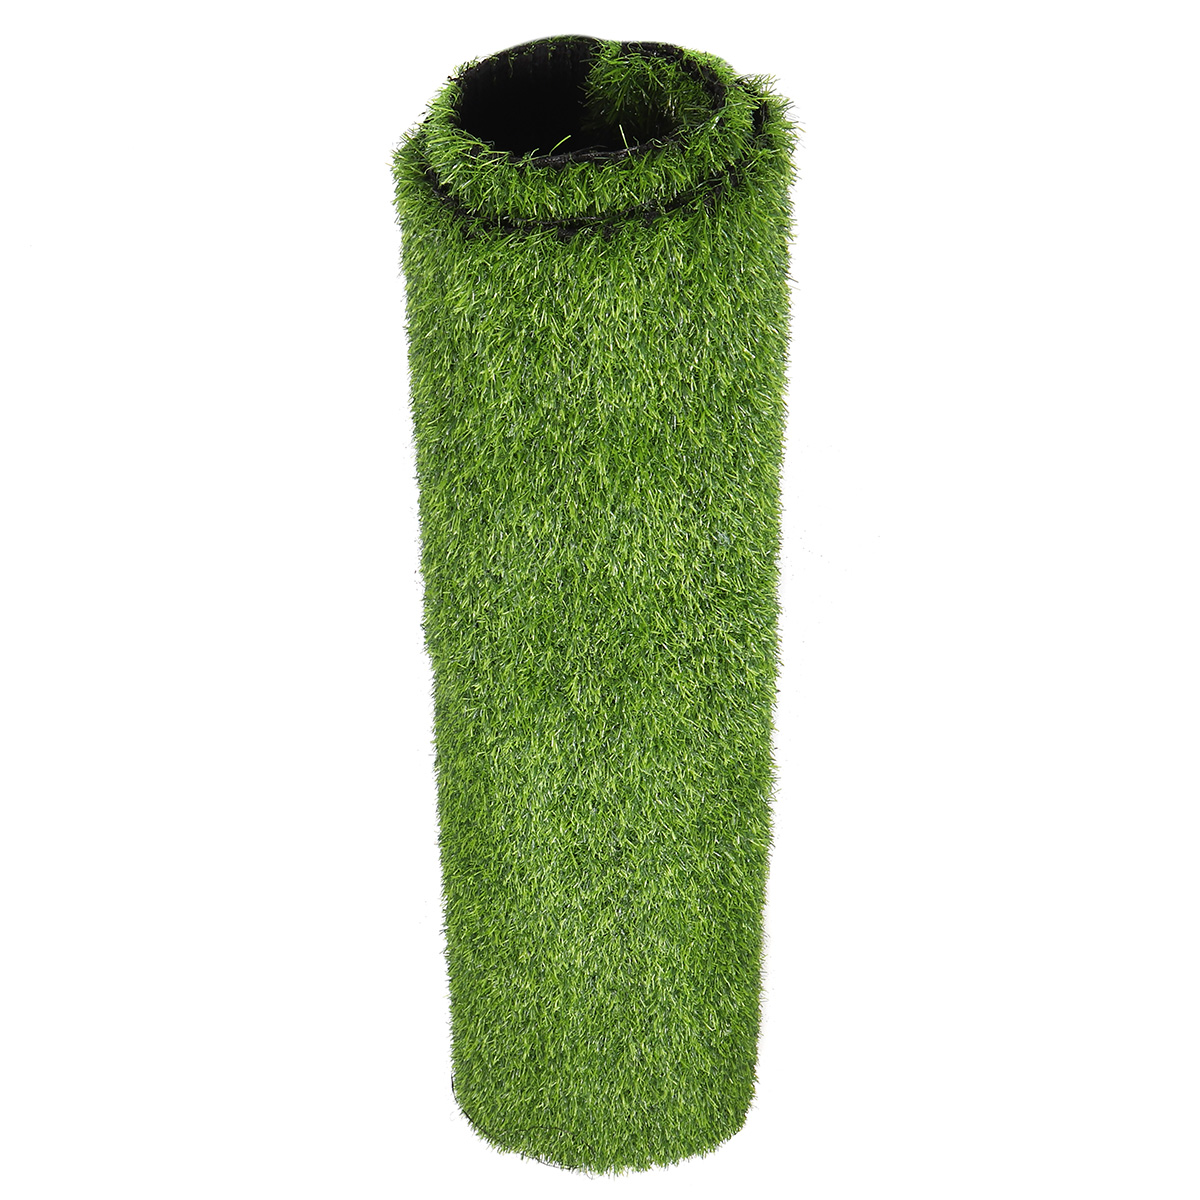 Artificial-Synthetic-Lawn-Turf-Plastic-Green-Plant-Grass-Garden-Decor-1694876-5